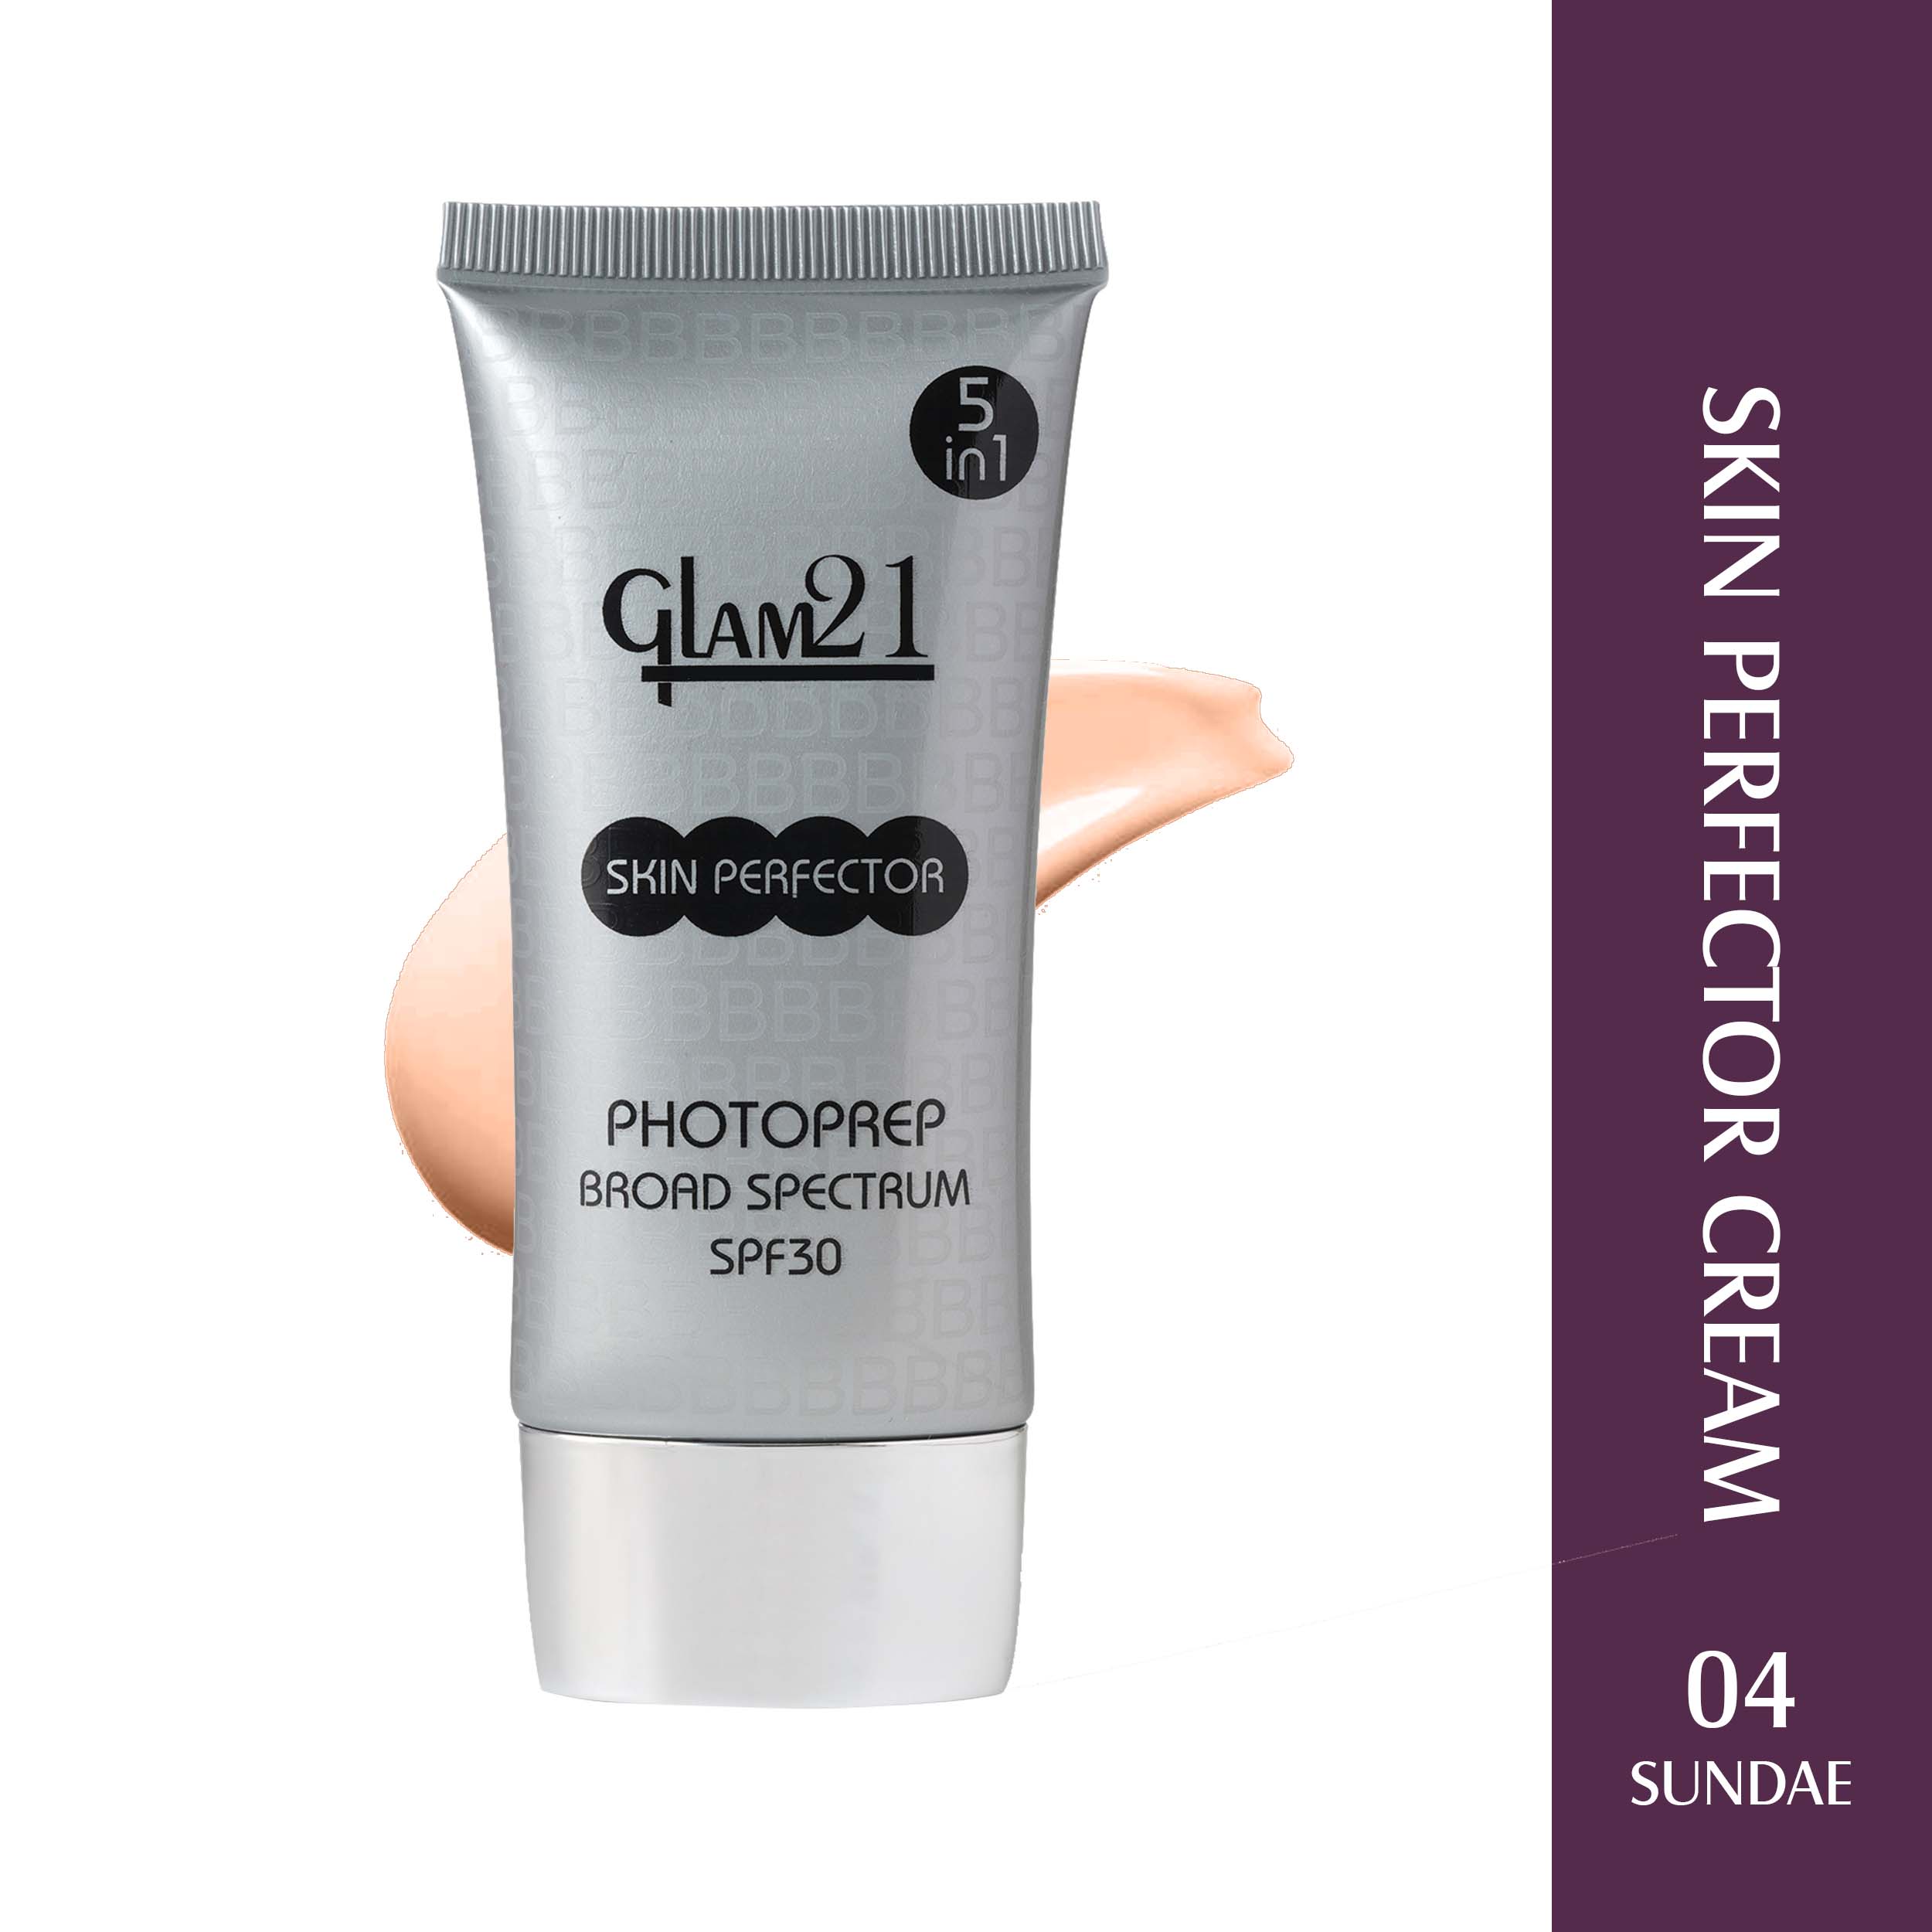 Glam21 Skin Perfector Cream with SPF30 UV Protection with Lightweight Satin Formulation Foundation, 50g (SUNDAE-04)